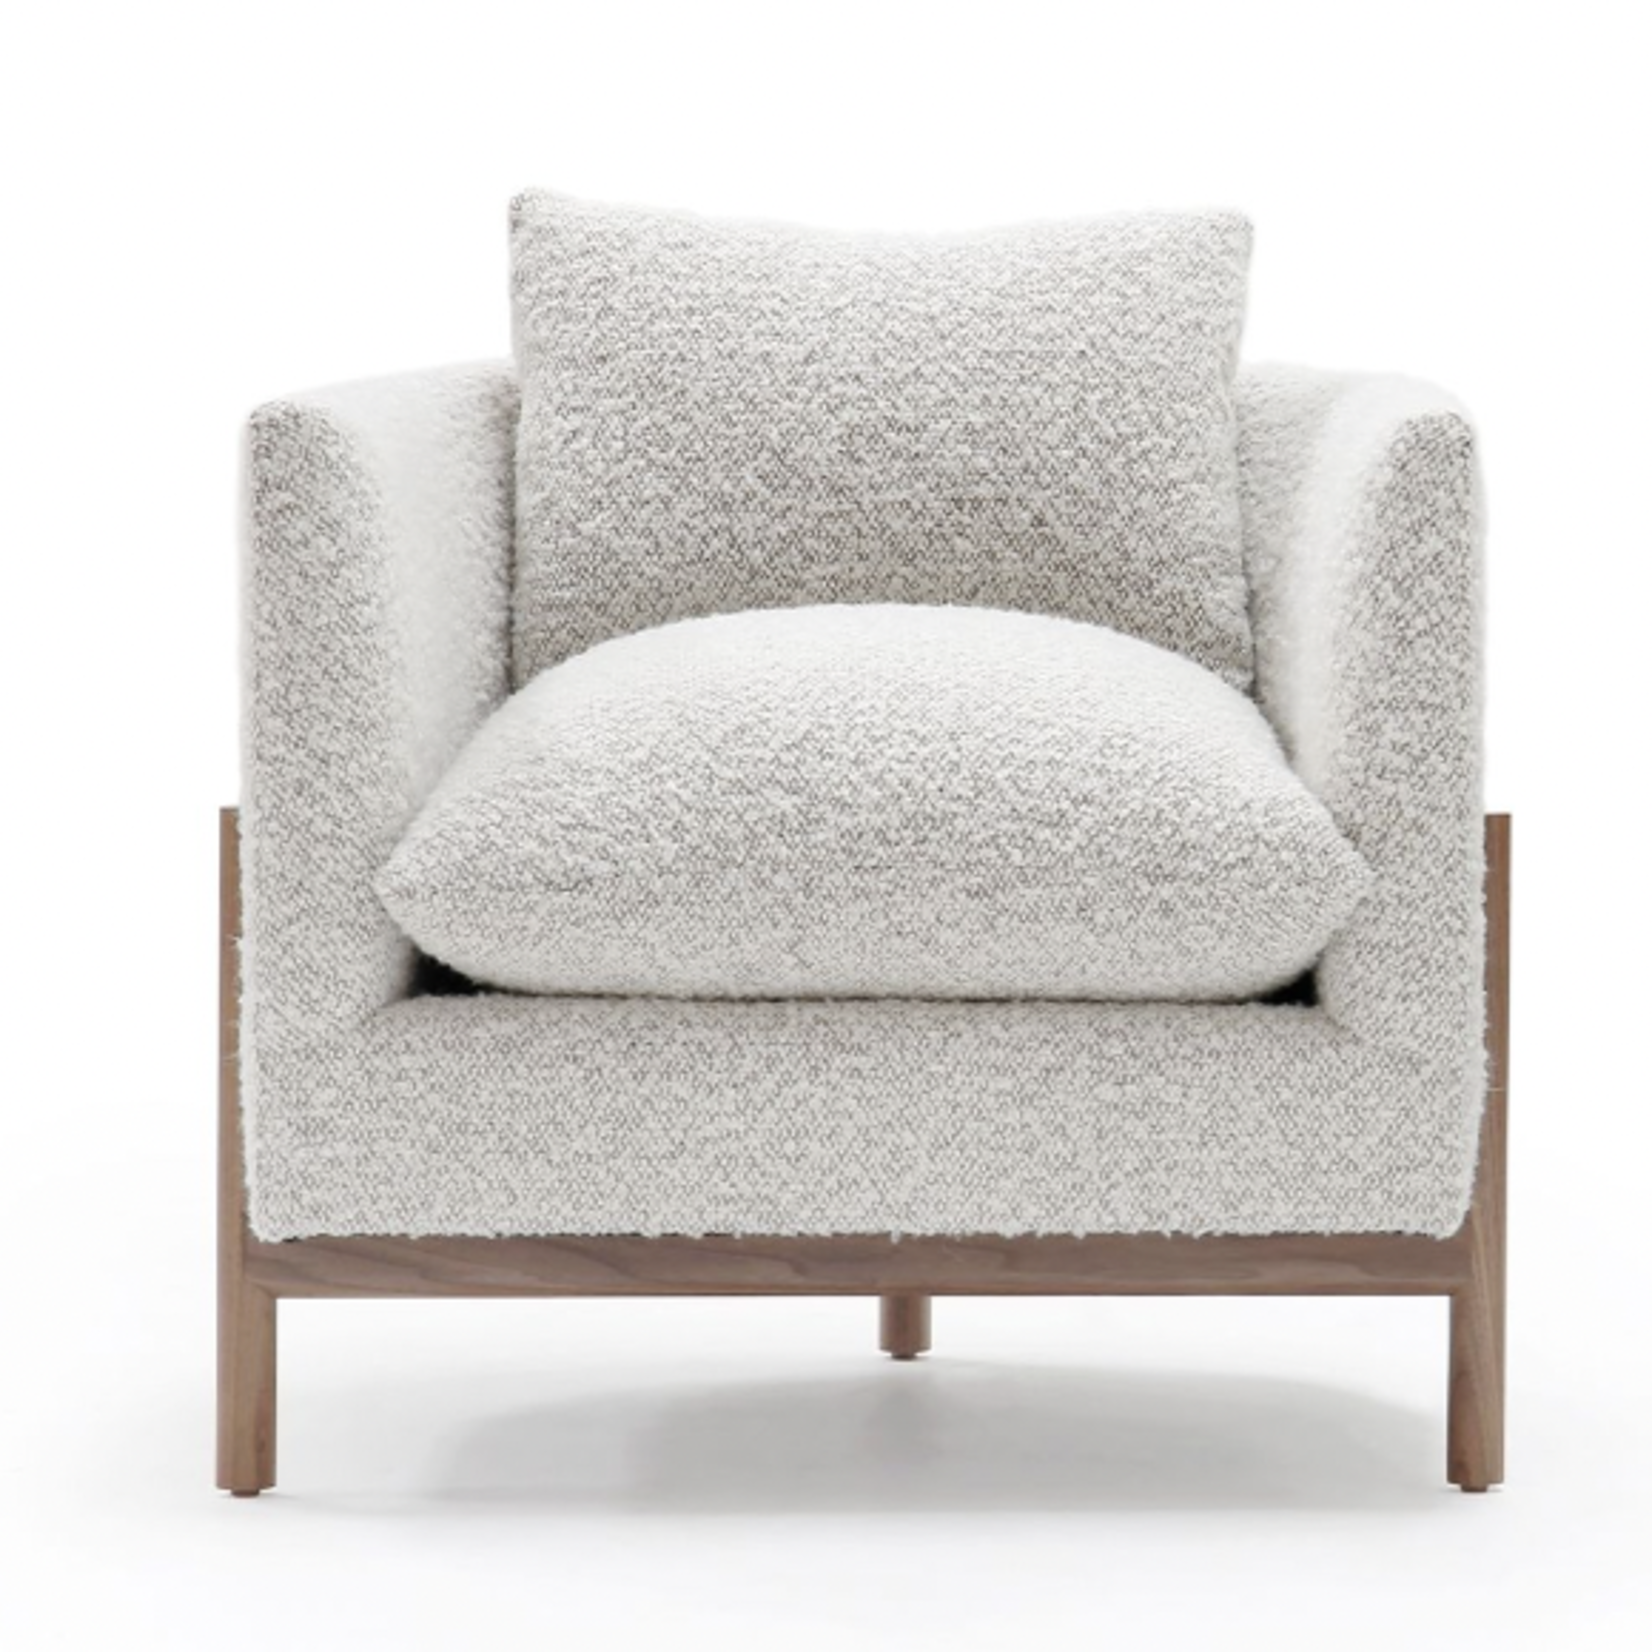 Verellen Sullivan Club Chair, Upholstered Sheepskin Natural